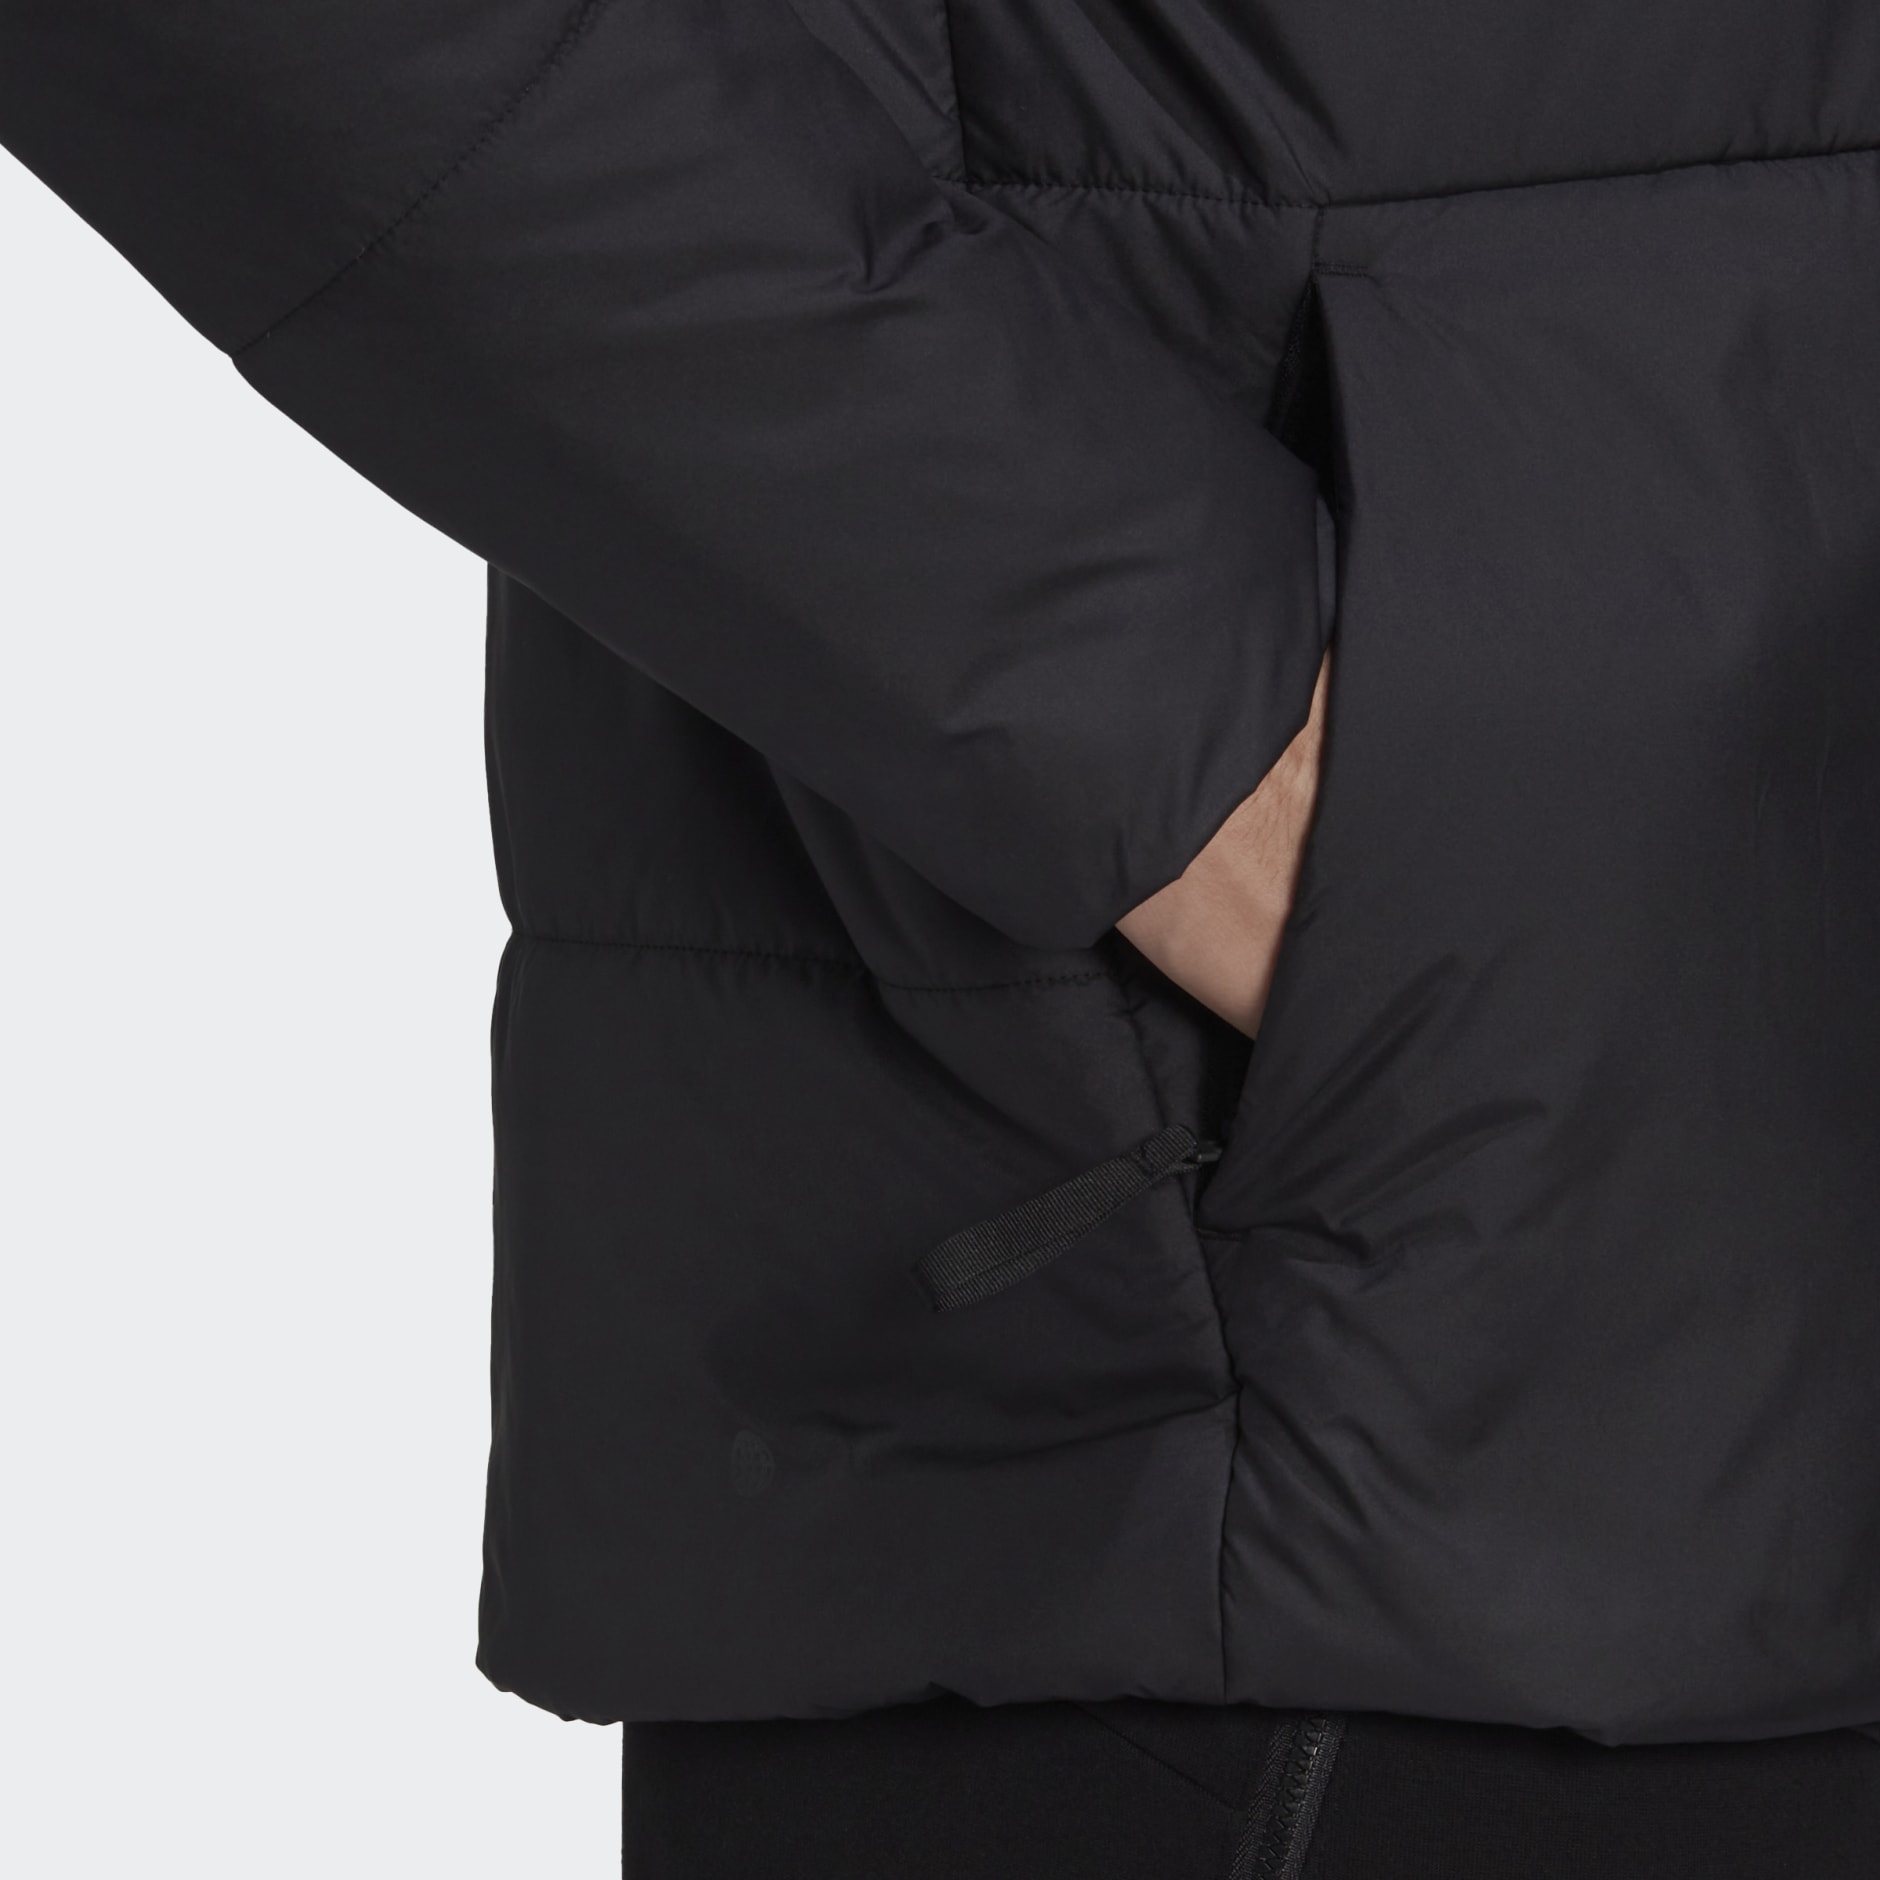 adidas BSC 3-Stripes Insulated Jacket - Black | adidas GH